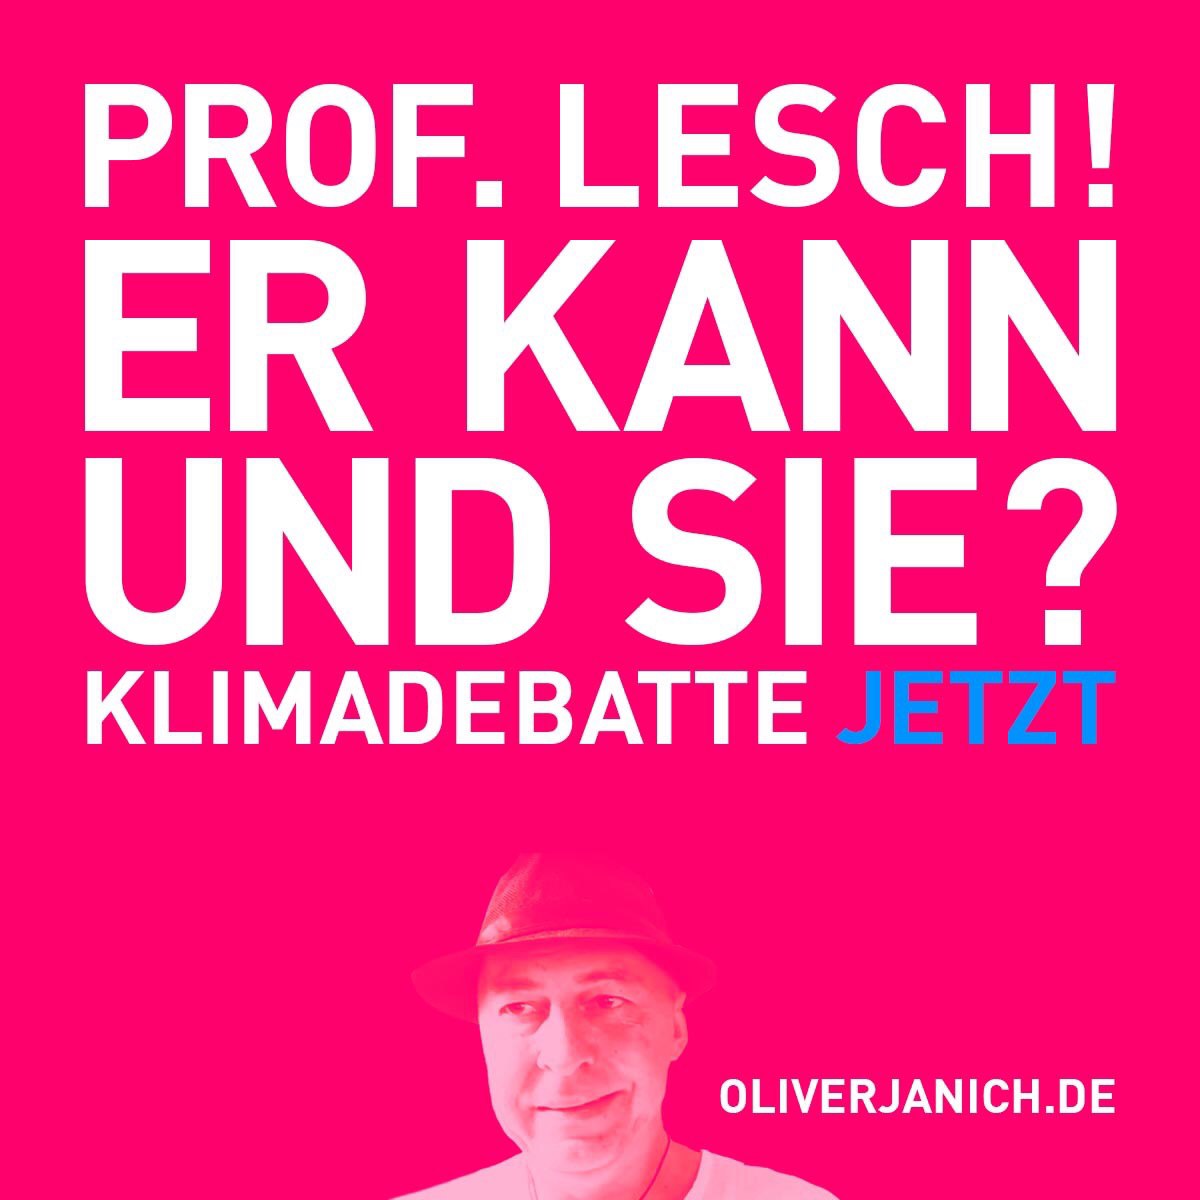 #OliWillReden Klimadebatte Oliver Janich Klimawandel #Rezo Prof. Lesch Terra X Lesch & Co 